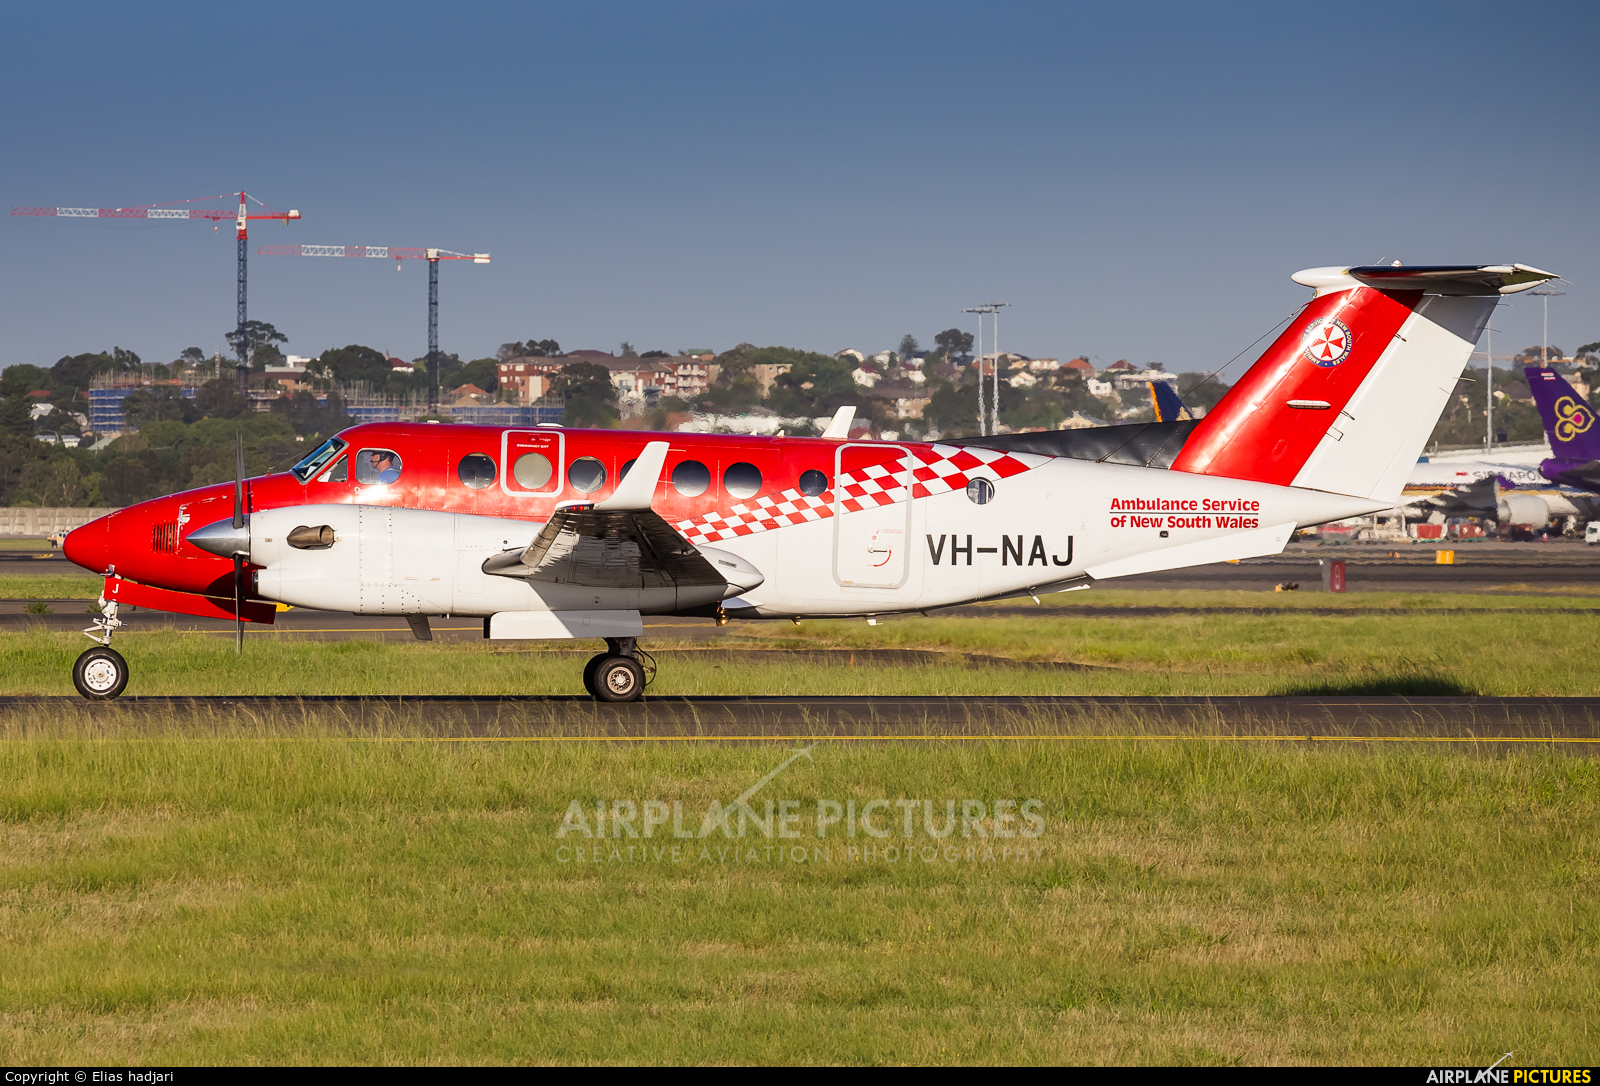 Ambulance Service of New South Wales VH-NAJ aircraft at Sydney - Kingsford Smith Intl, NSW